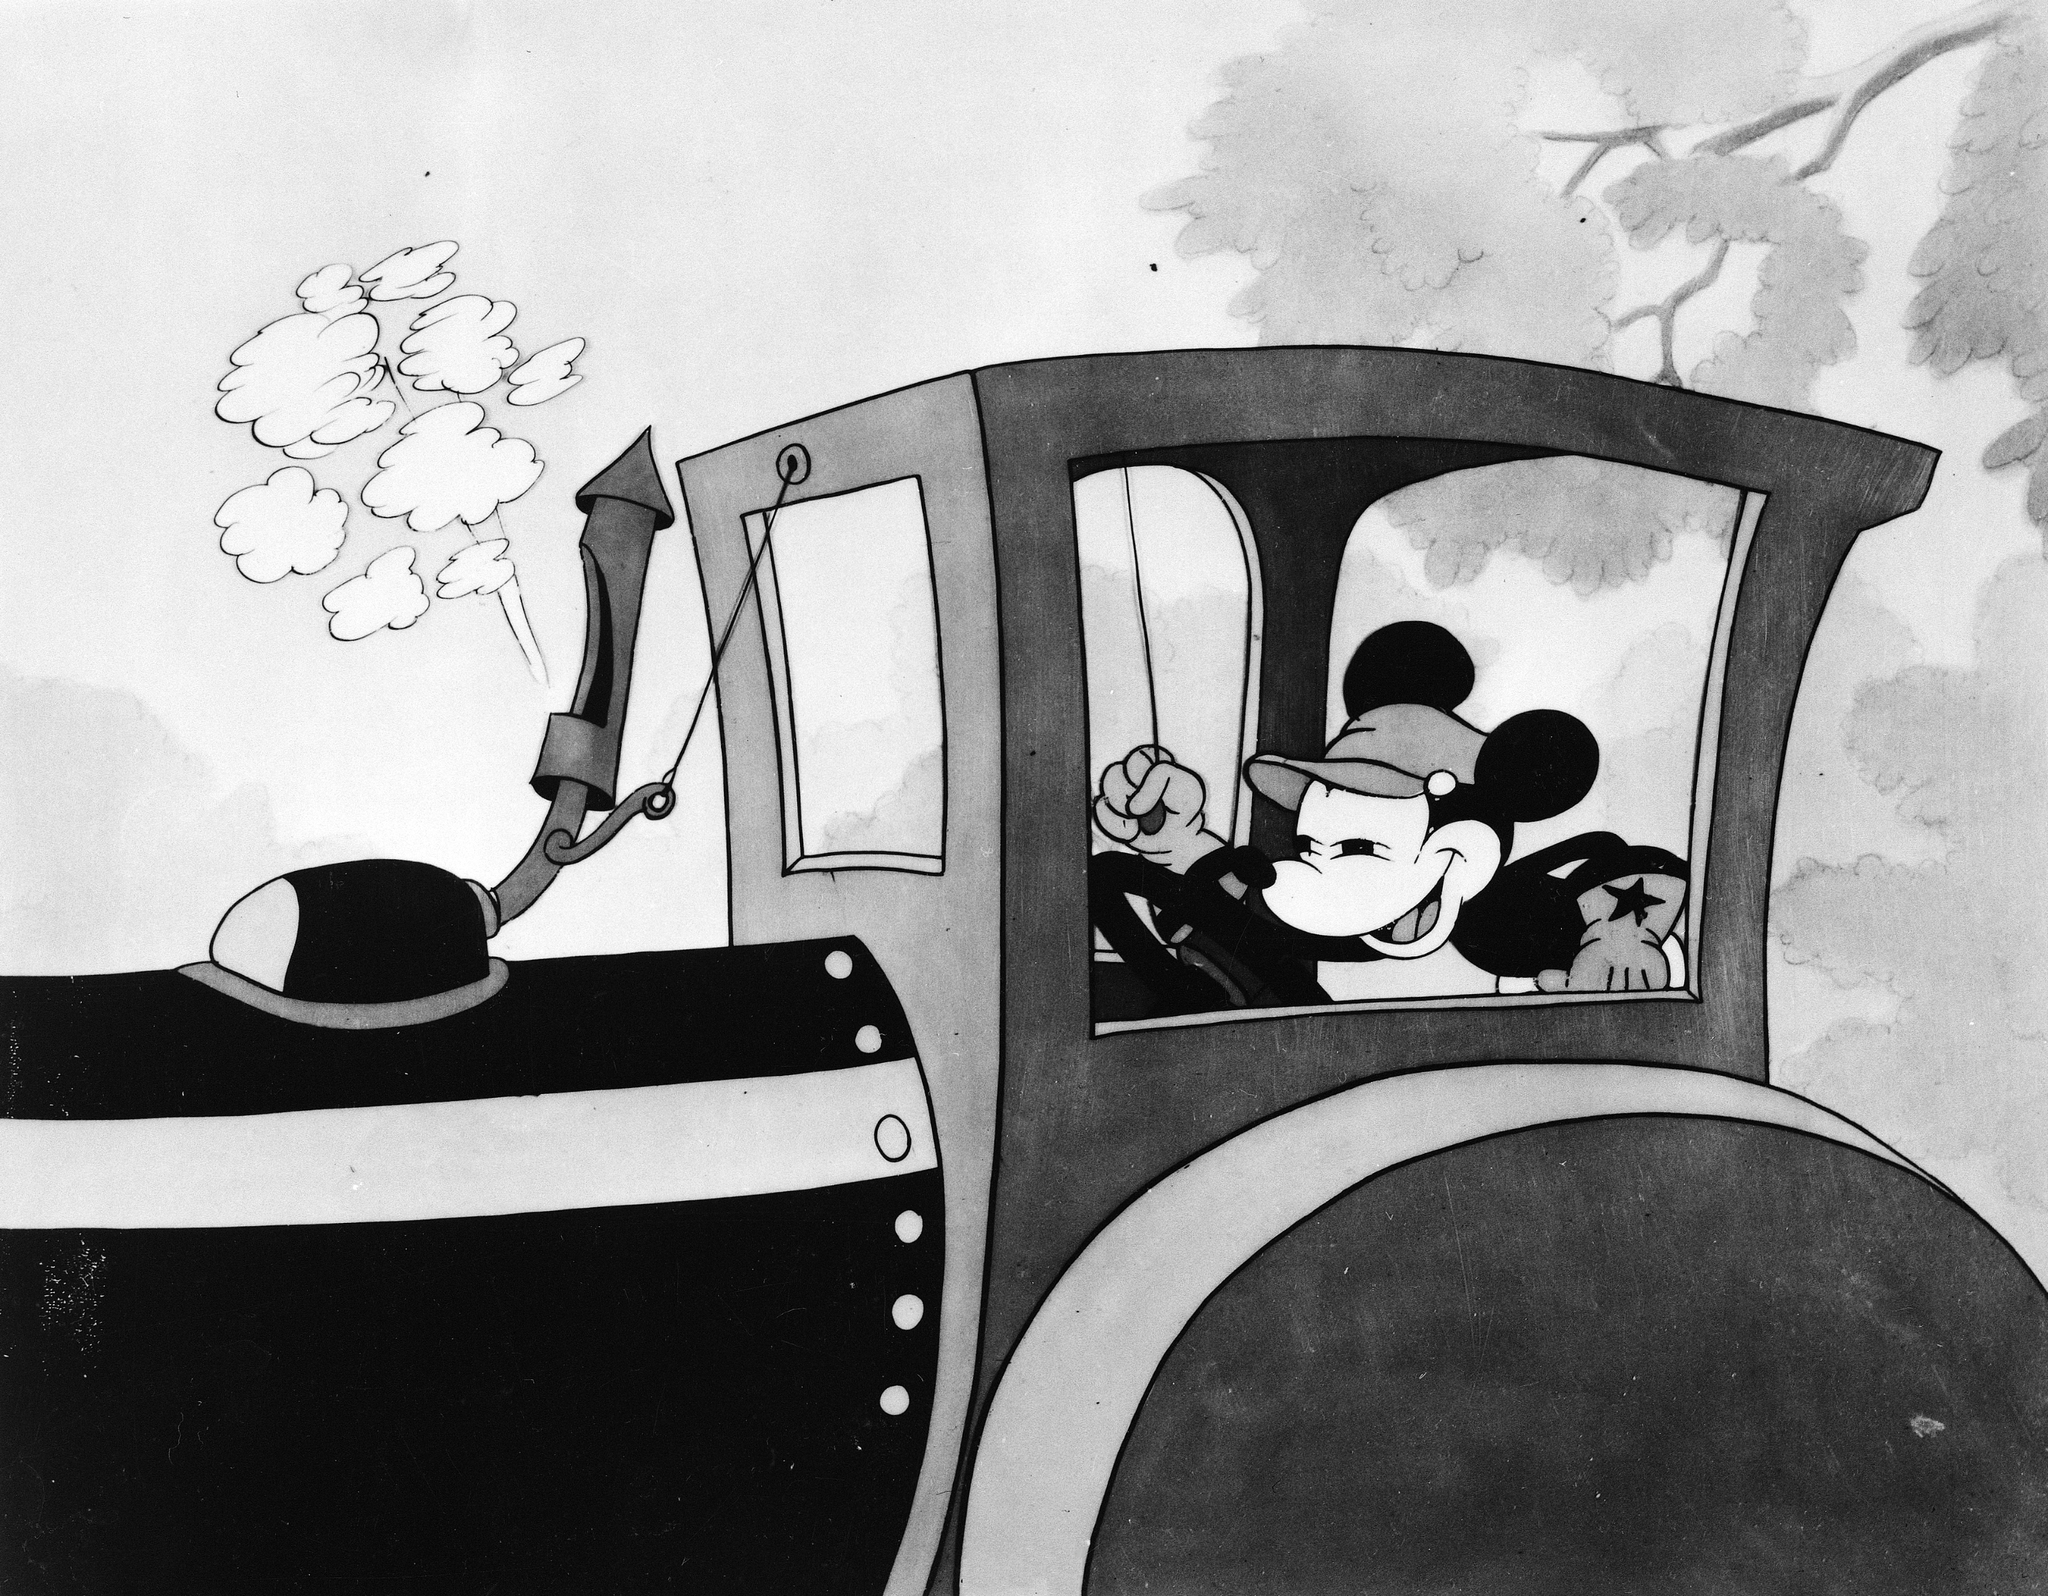 Walt Disney "Steamboat Willie" script